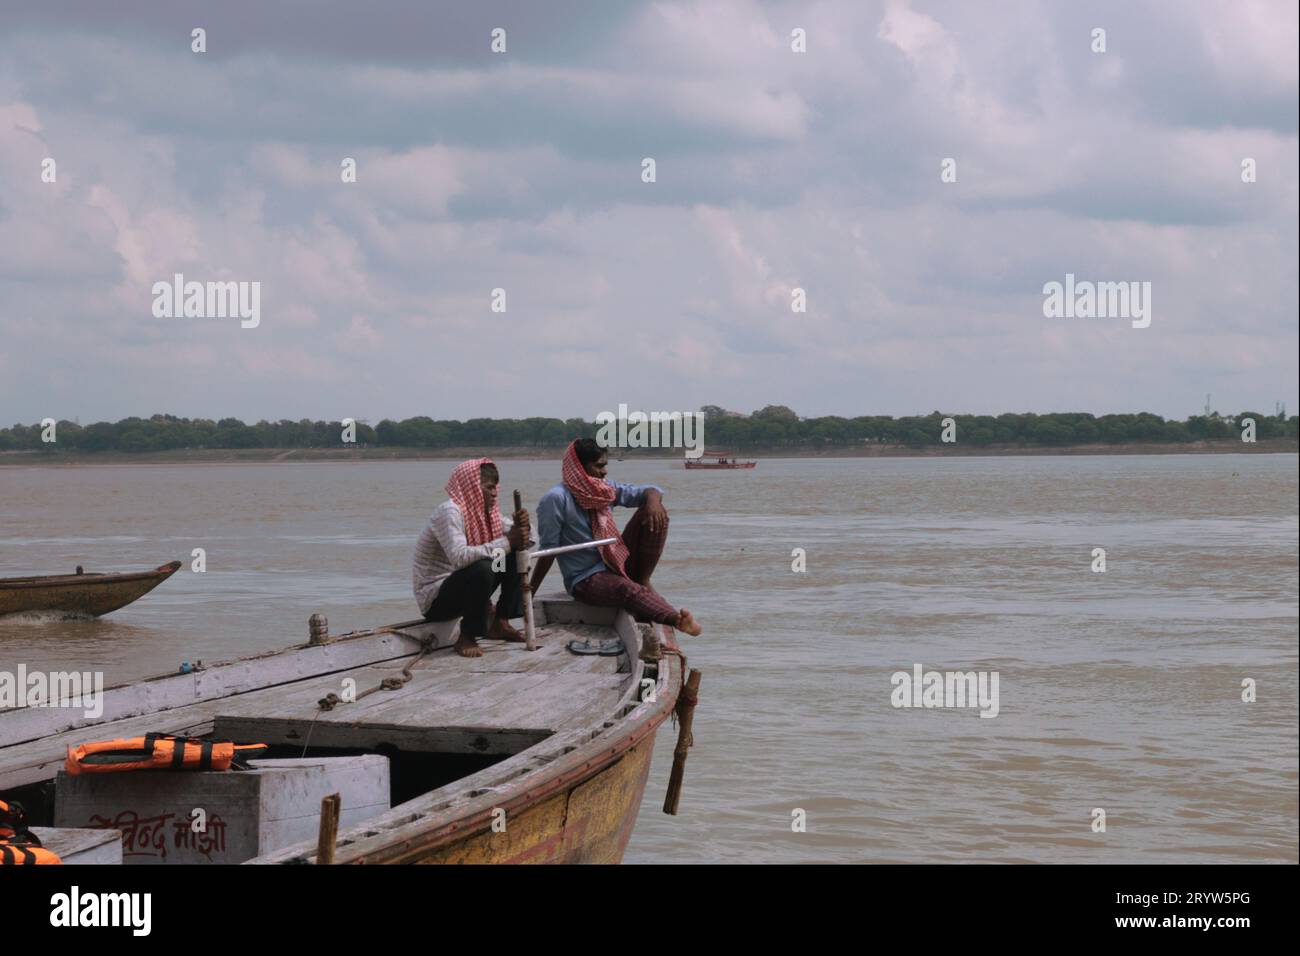 2 men on a boat in the Ganges river in Varanasi. Stock Photo